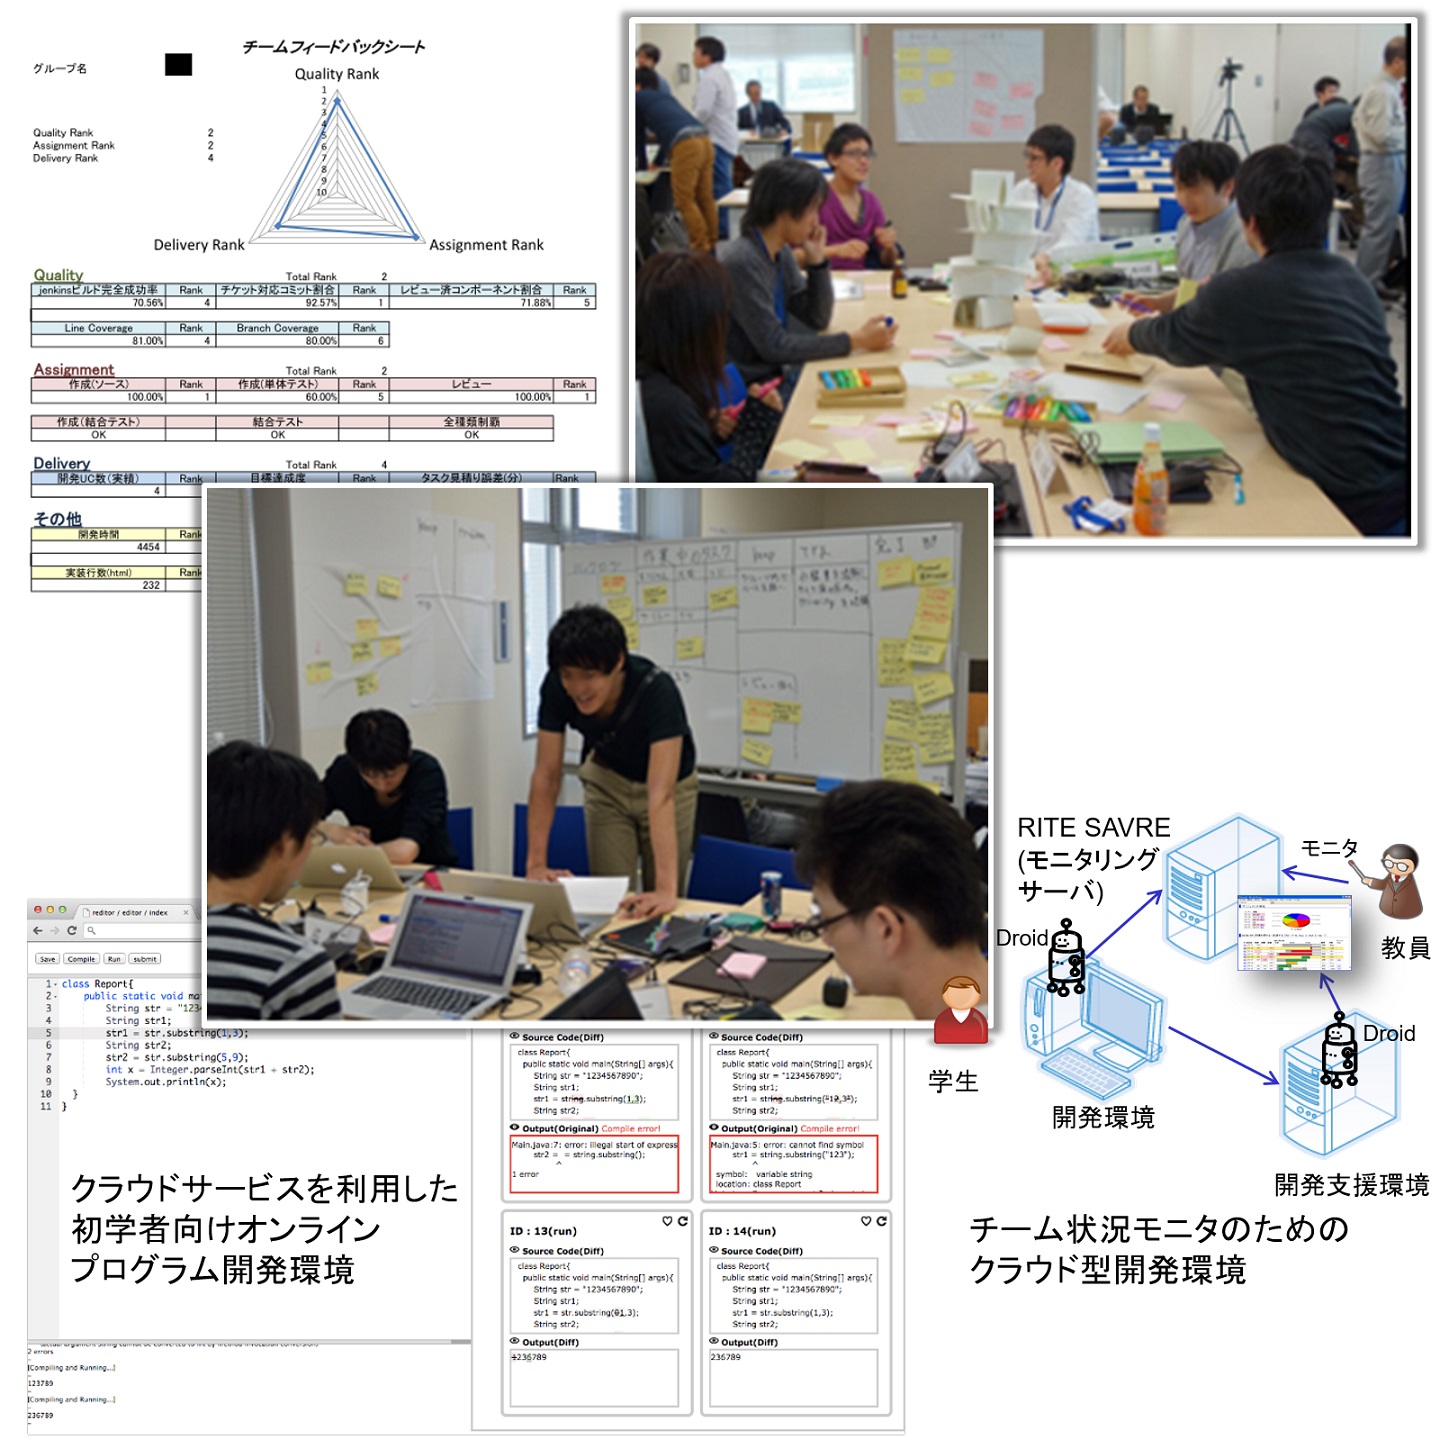 Team Software Development Laboratory